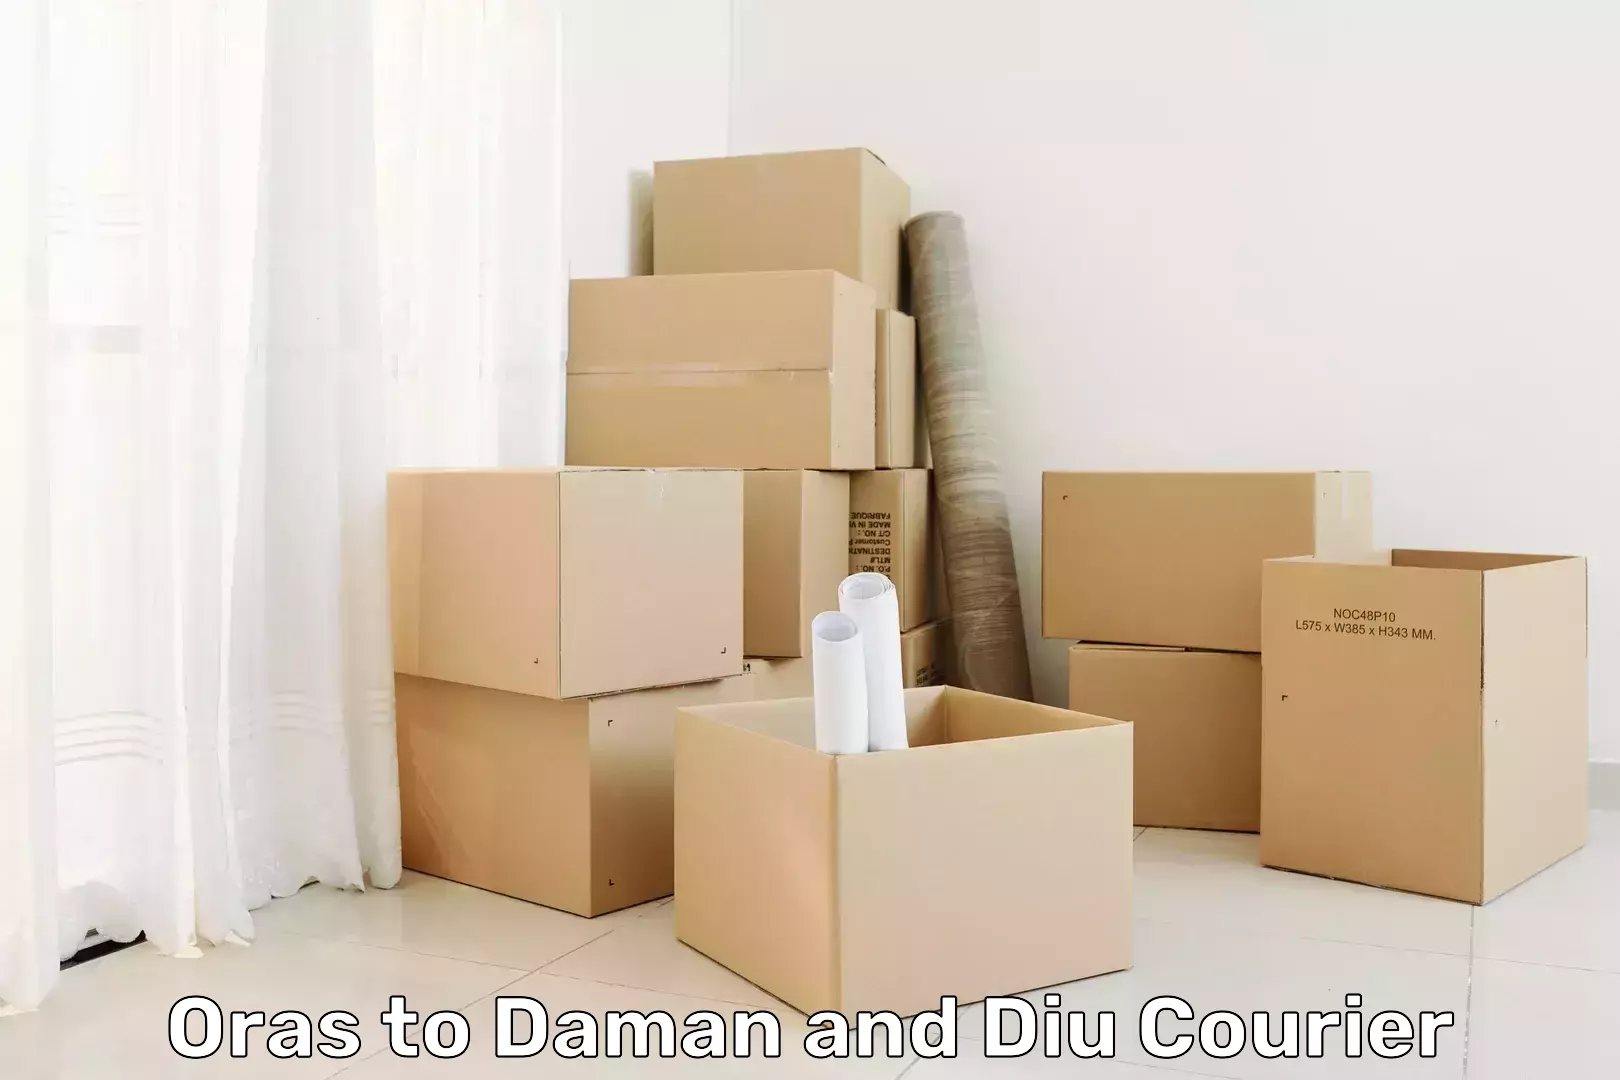 Courier service comparison Oras to Daman